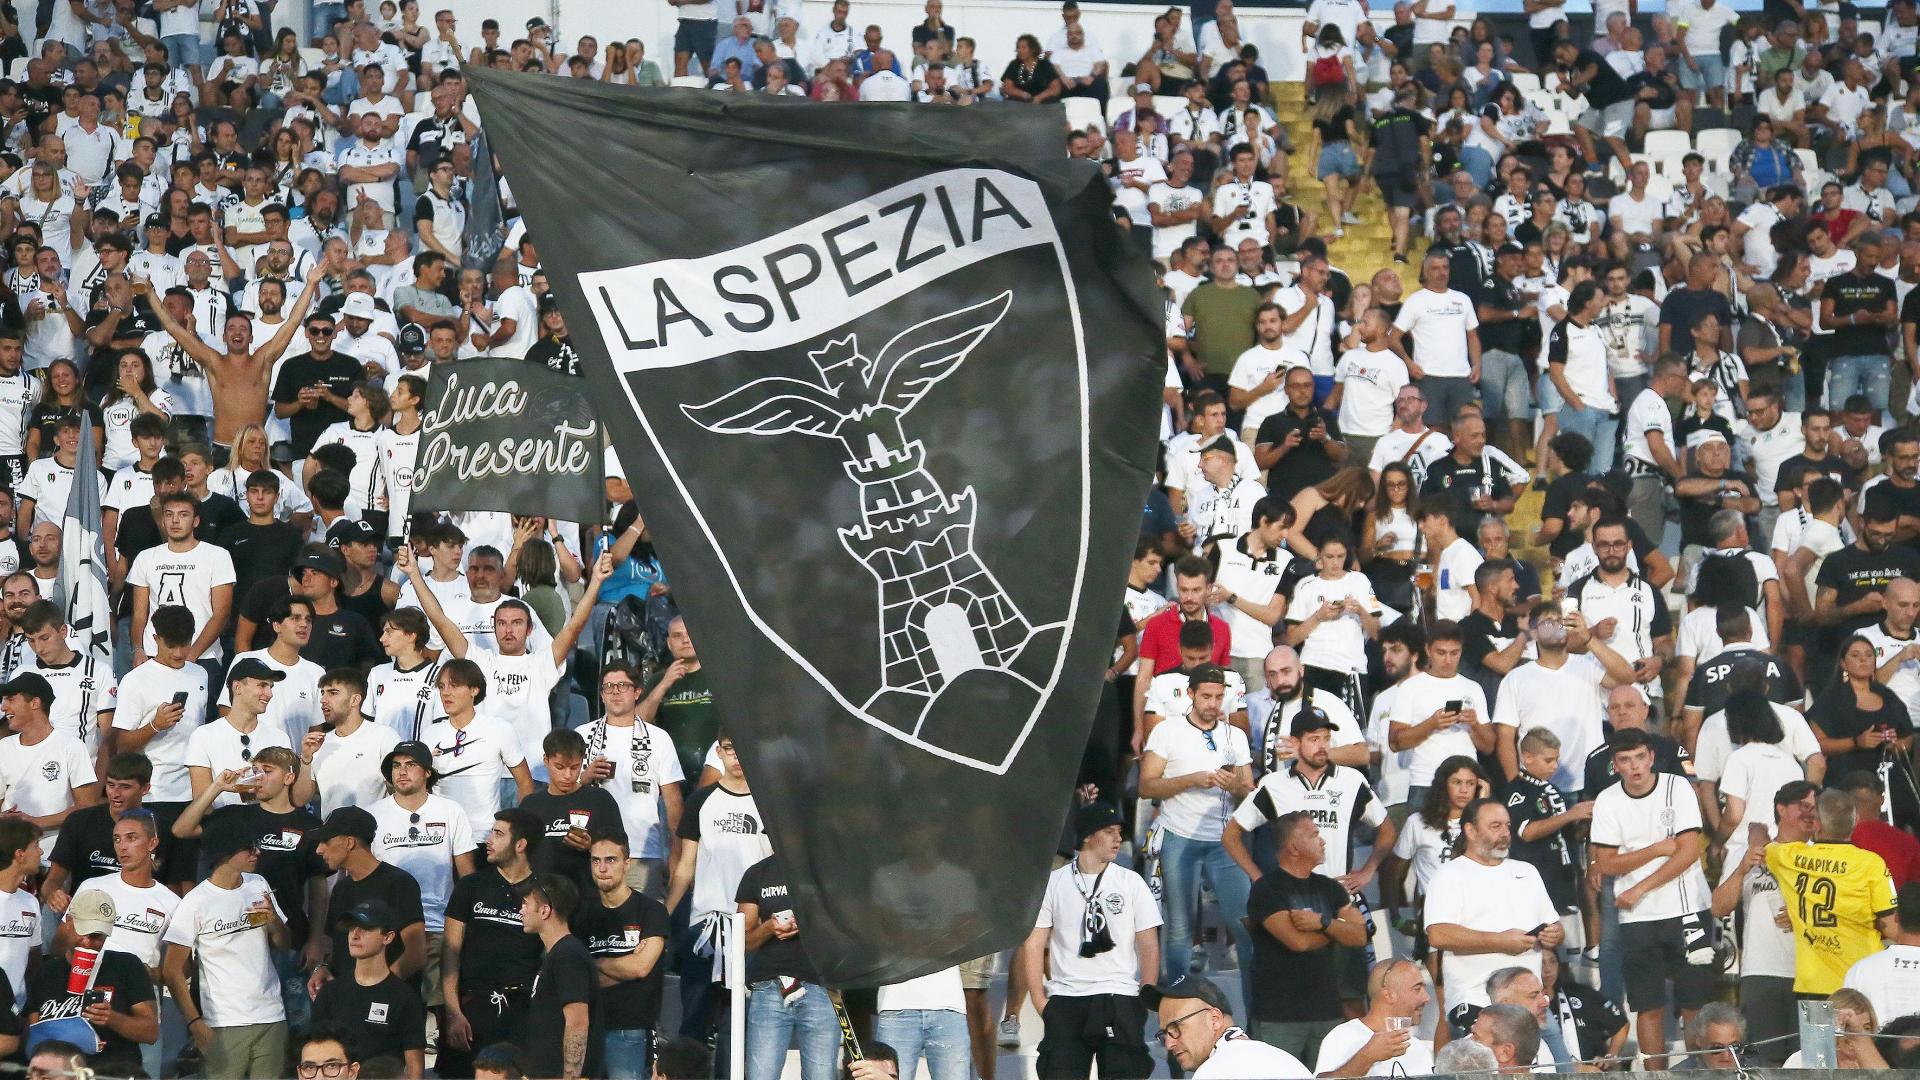 Spezia-Sampdoria: vendita libera da martedì 13 settembre